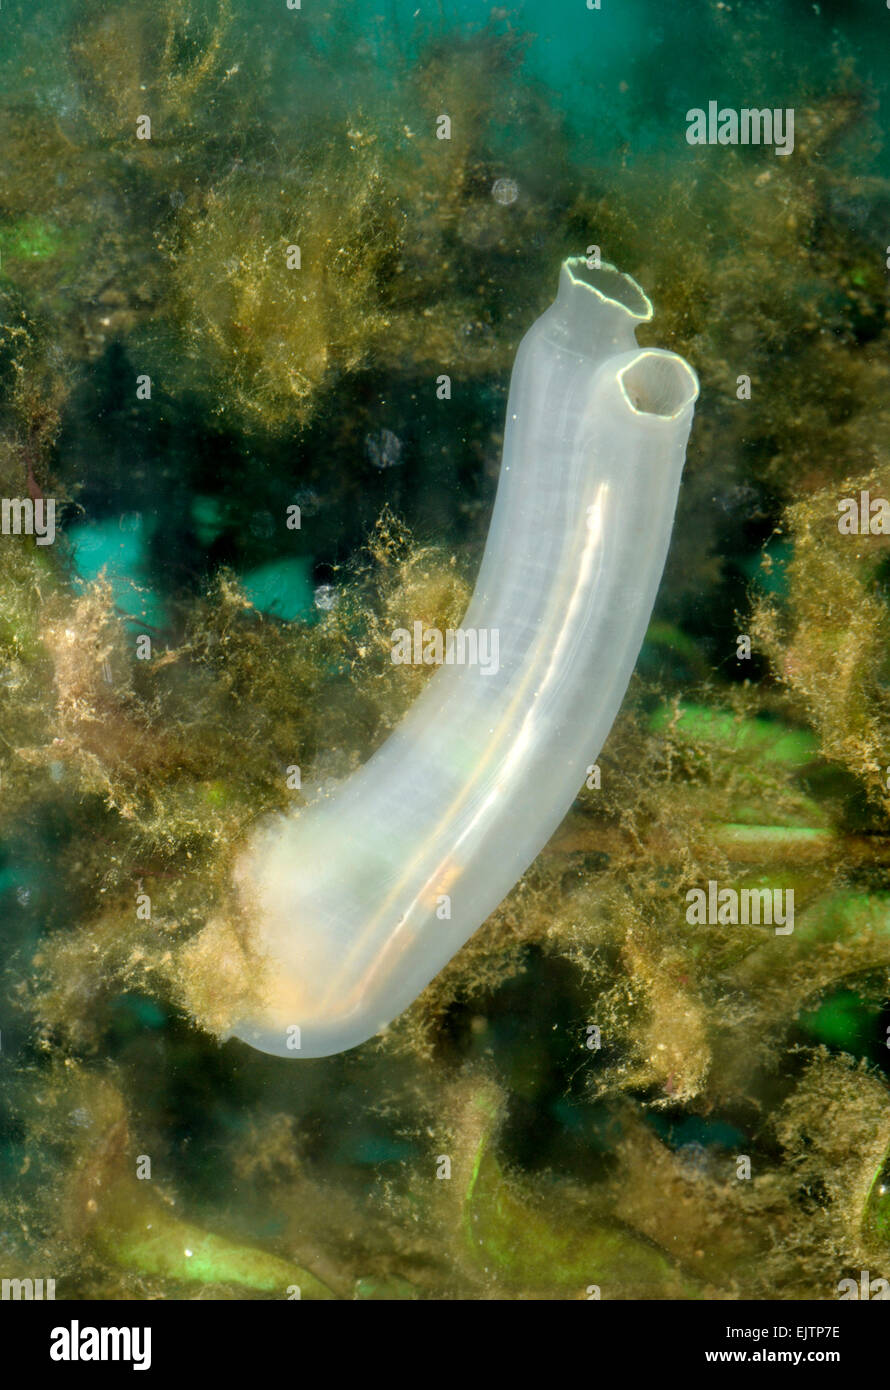 Ciona intestinalis - Sea Squirt Stock Photo